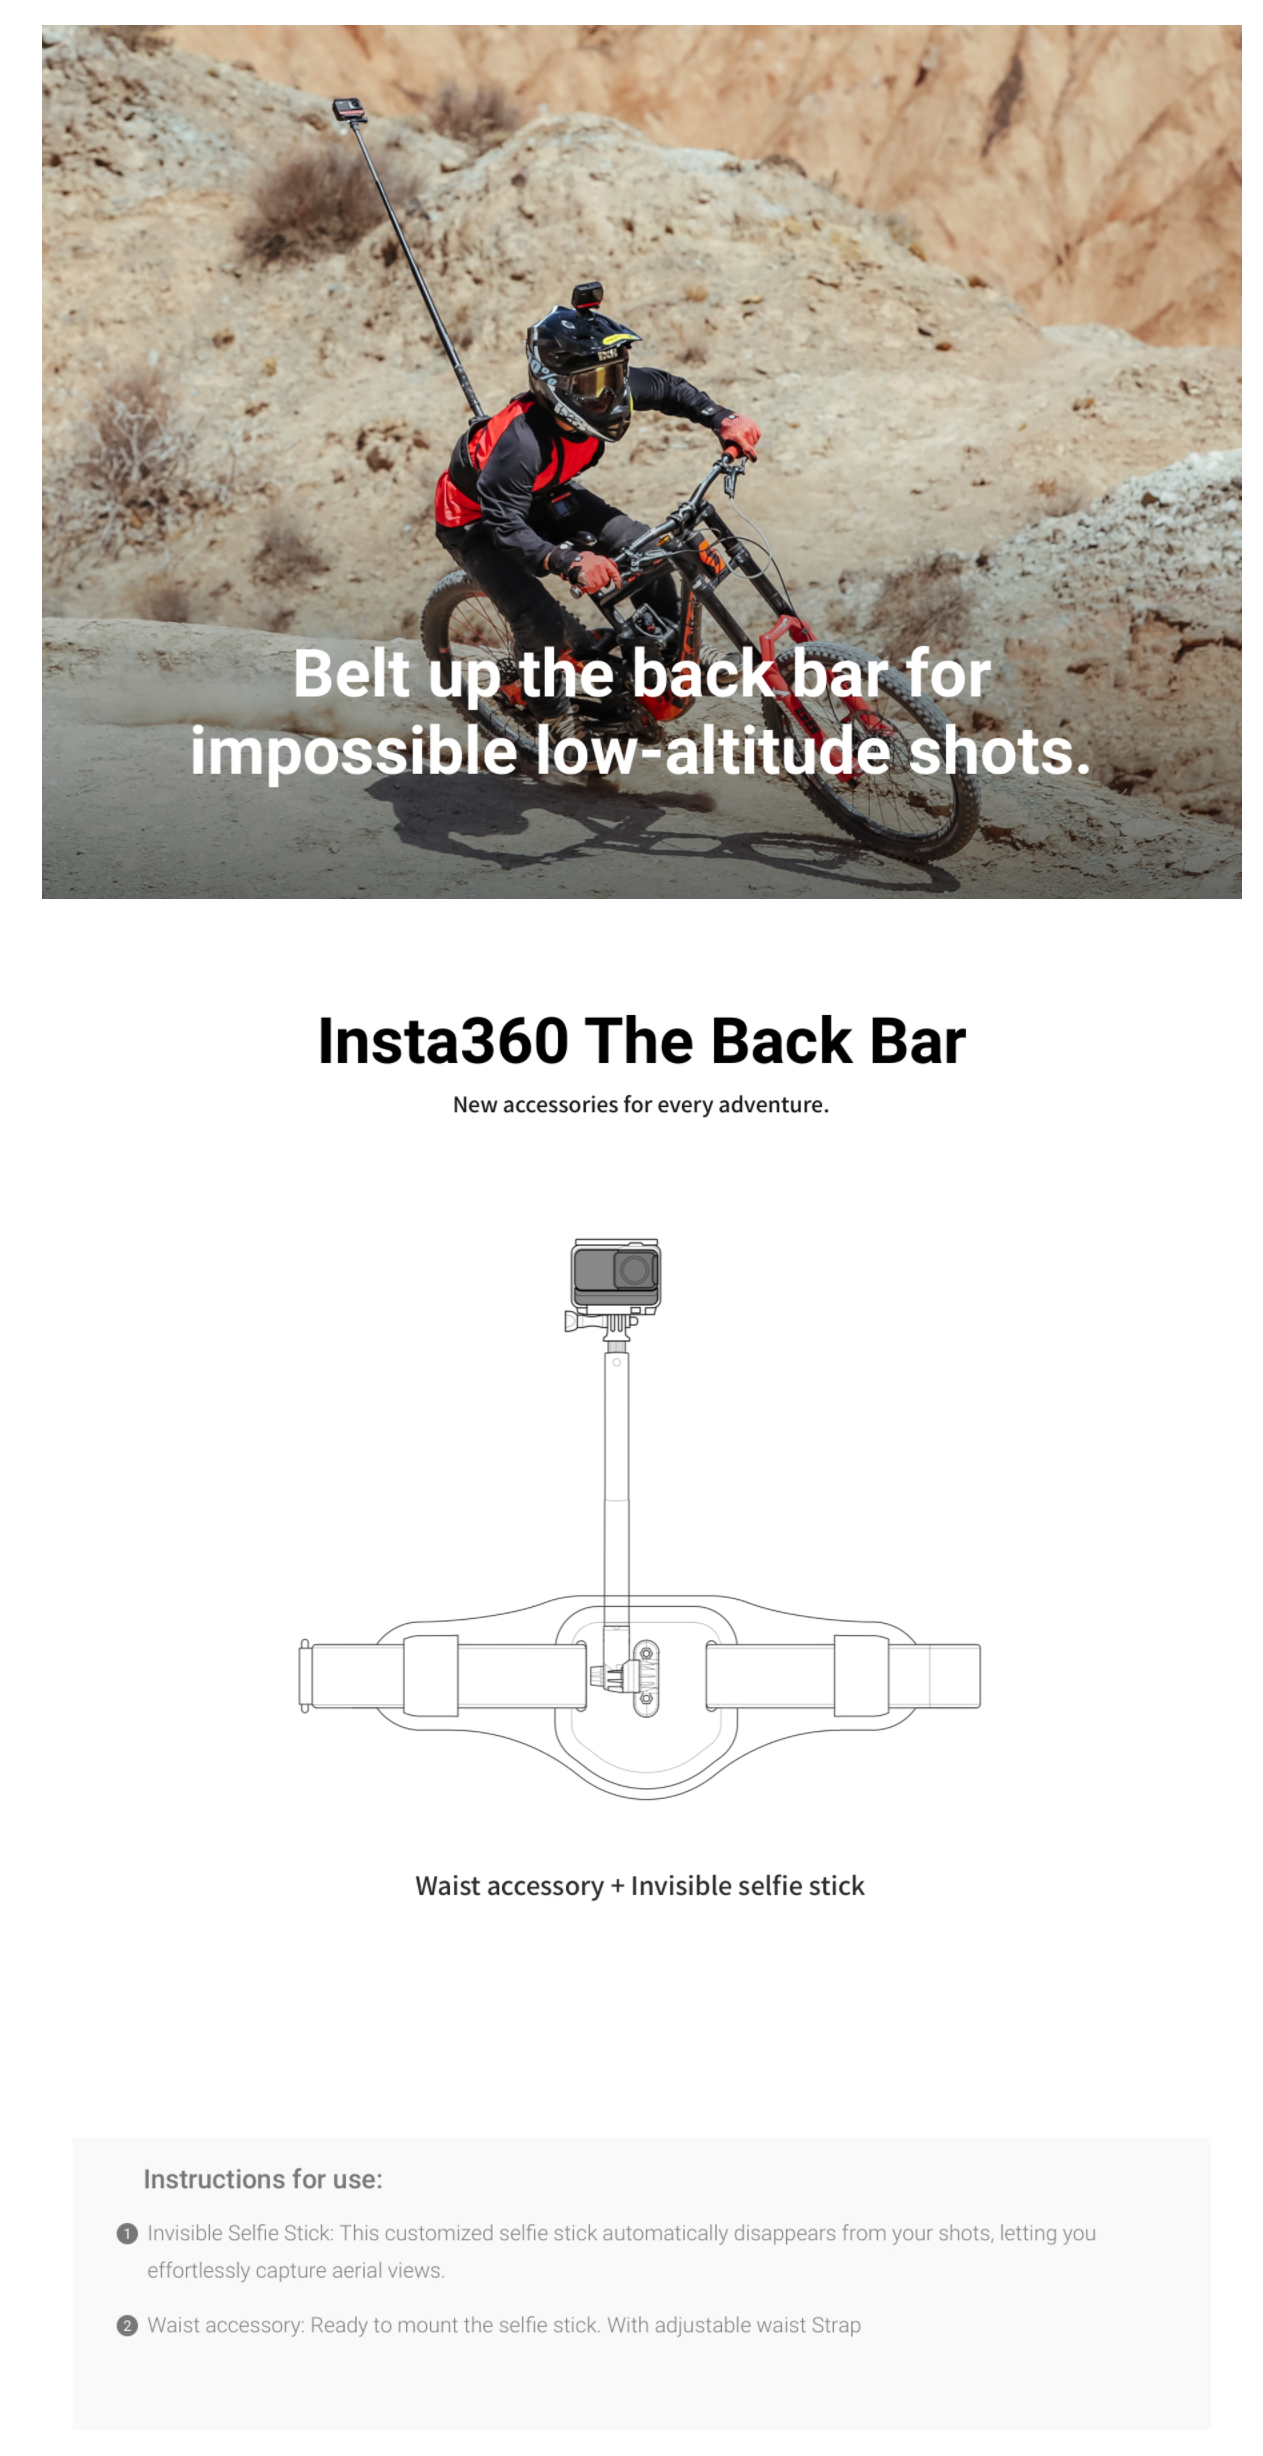 insta360 The Back Bar